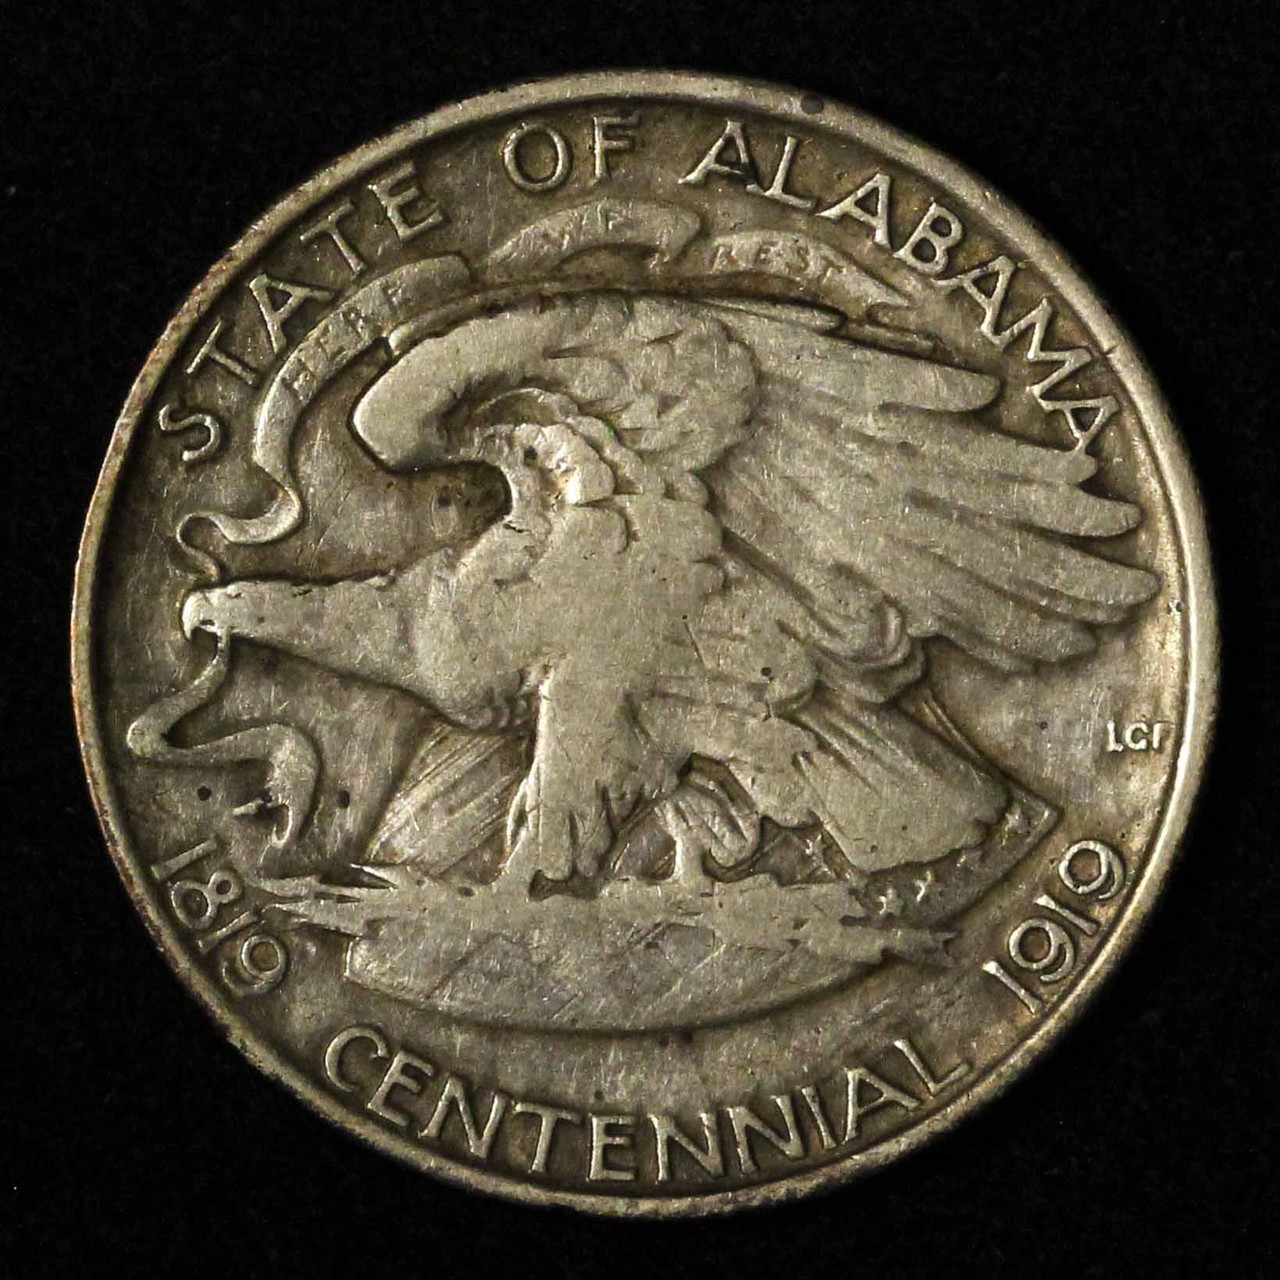 1921 50c Alabama Commemorative Silver Half Dollar - Free Shipping